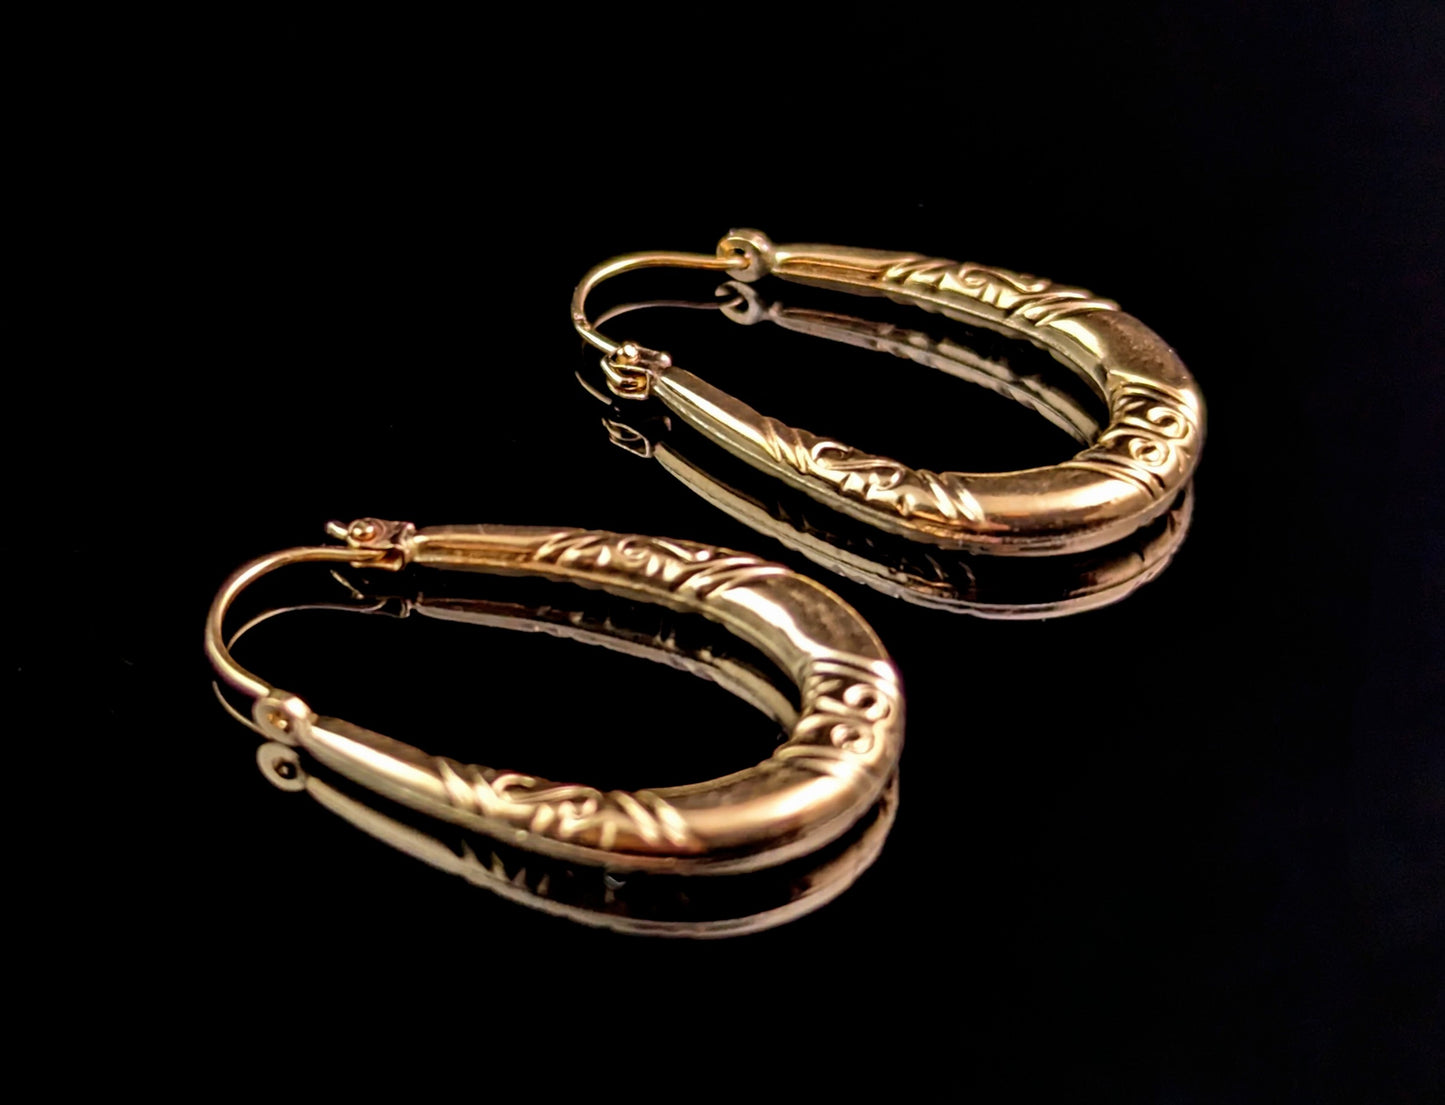 Vintage 9ct yellow gold creole hoop earrings